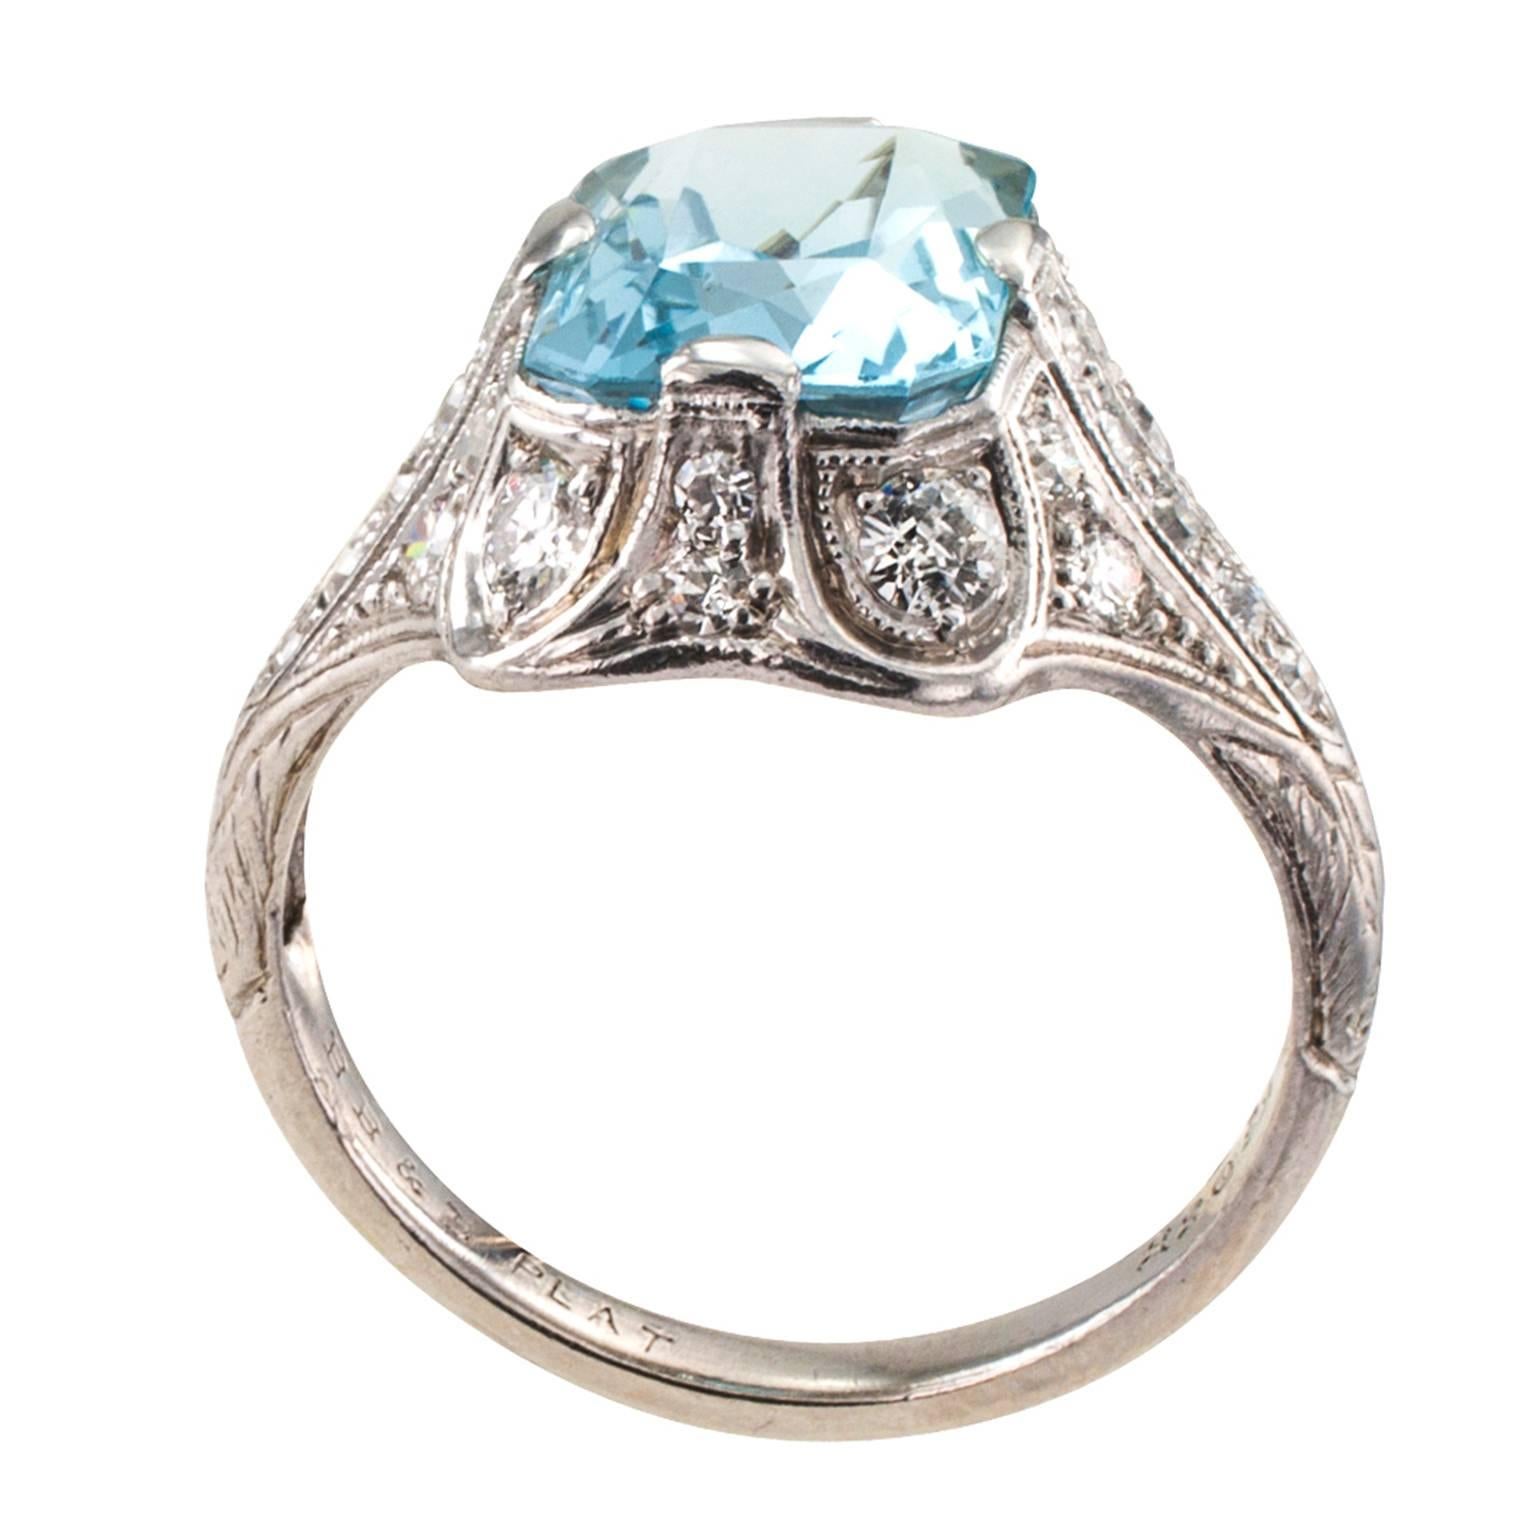 Bailey Banks & Biddle Art Deco Aquamarine Diamond Platinum Ring 1